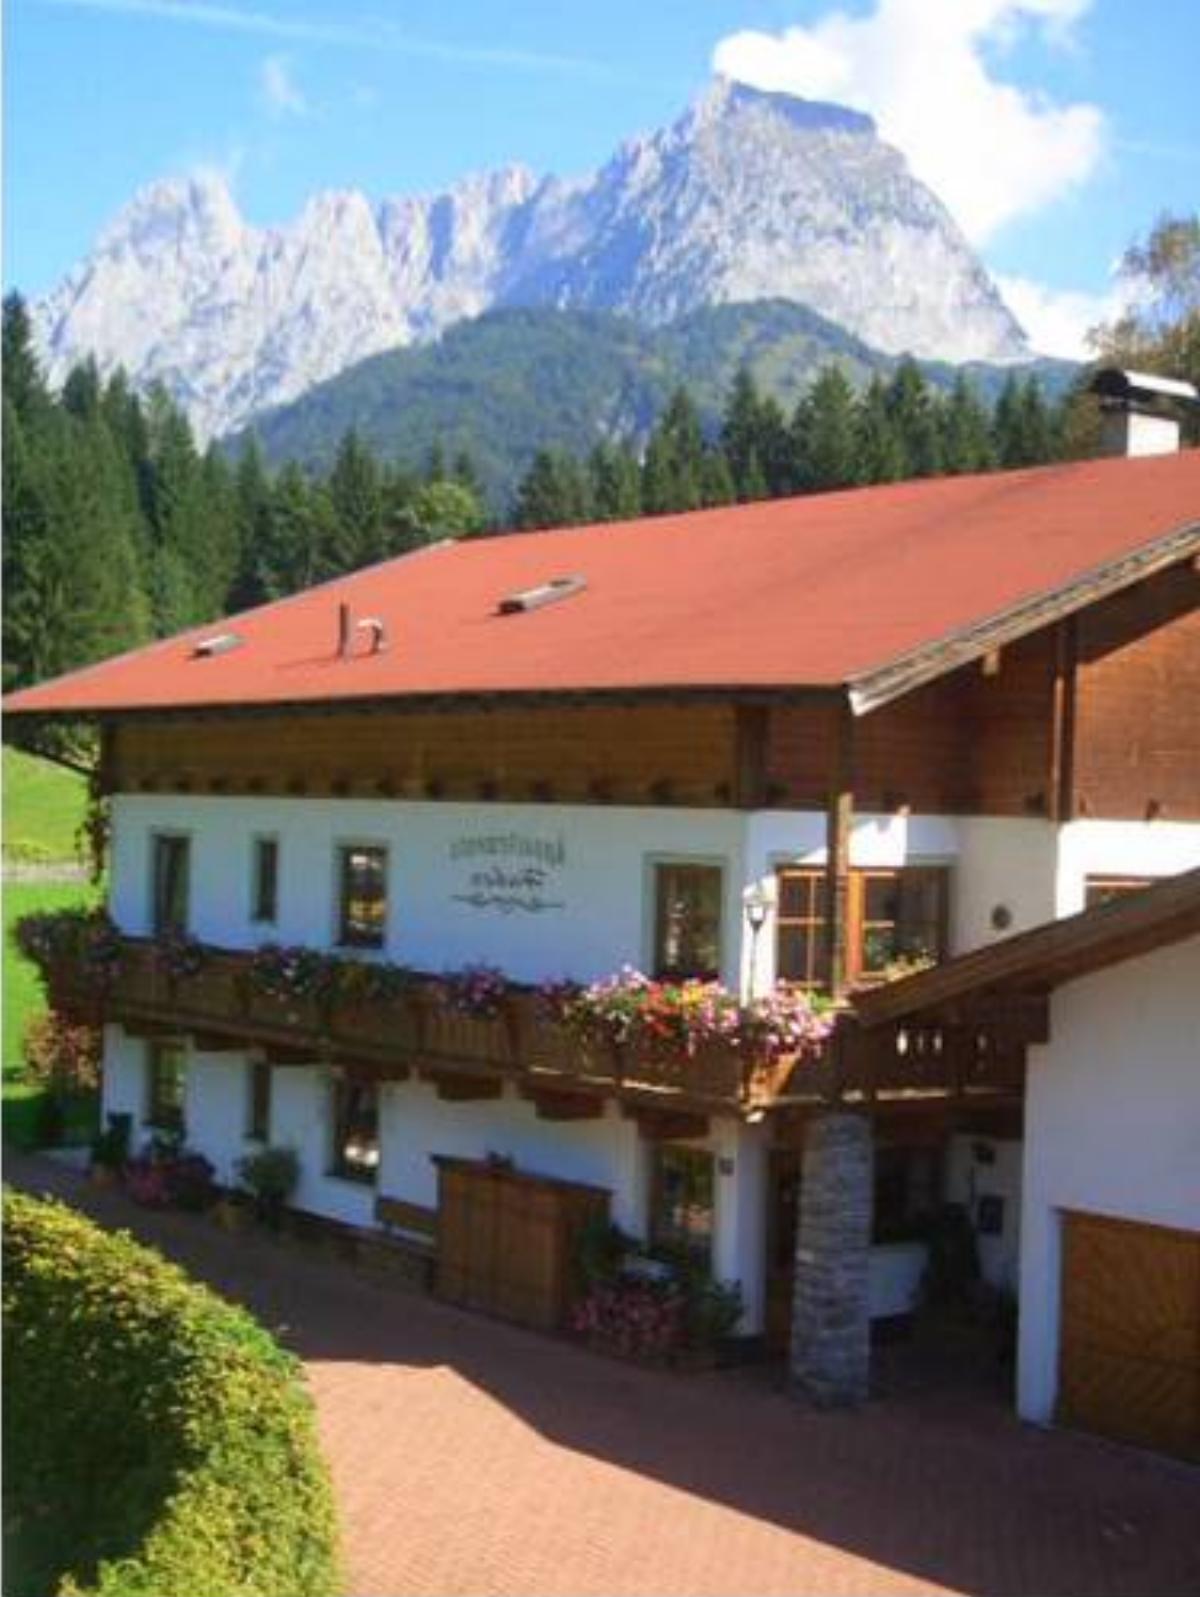 Haus Huber Hotel Kirchdorf in Tirol Austria